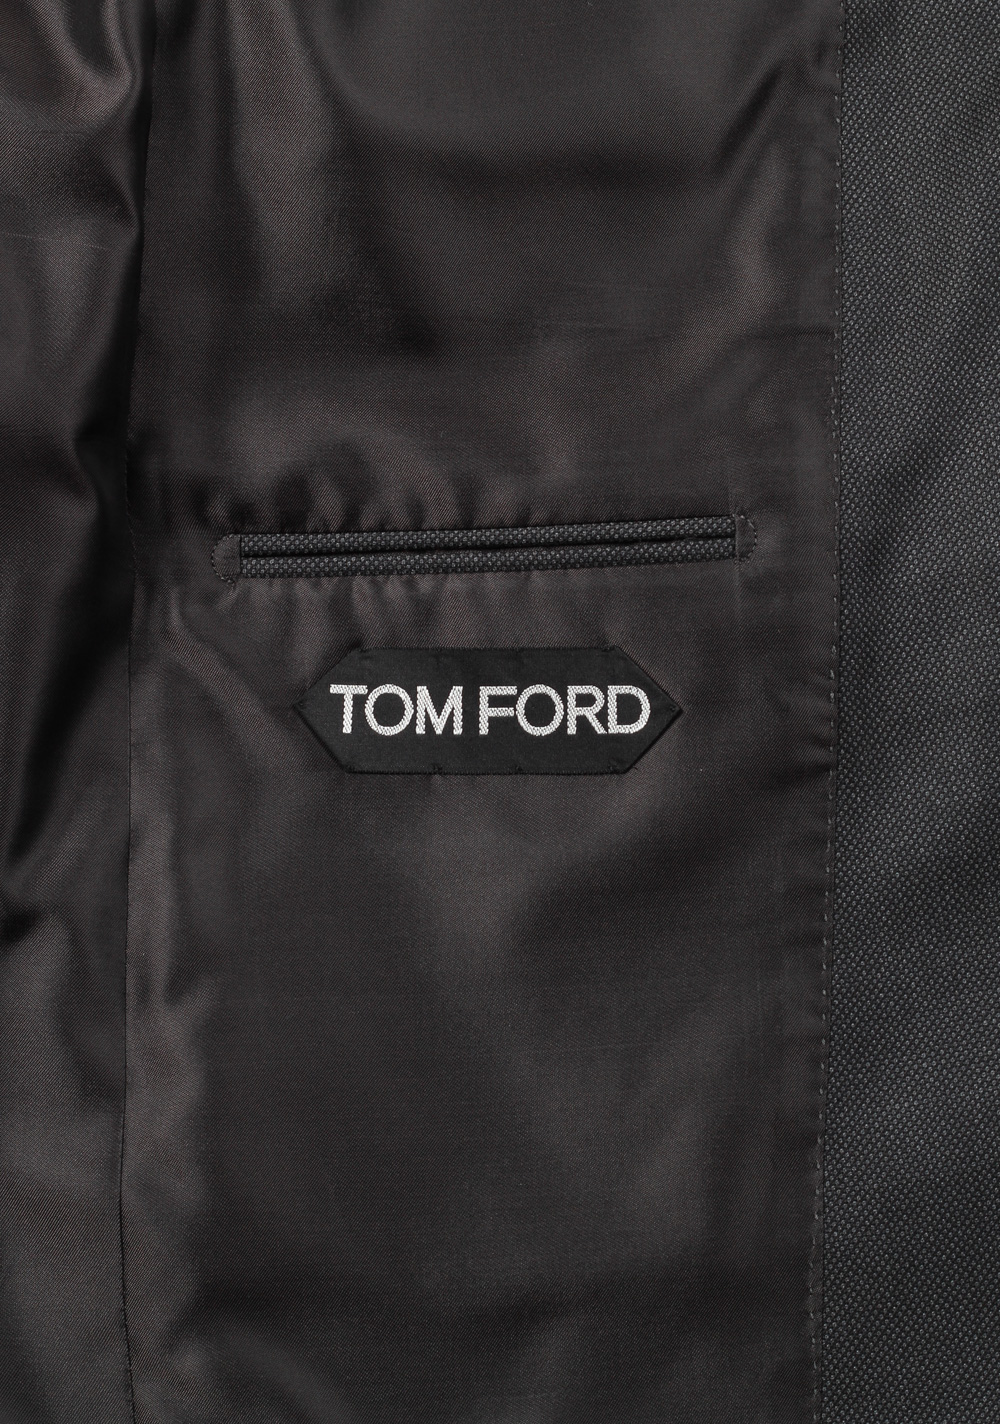 TOM FORD Windsor Birdseye Gray Suit Size 54 / 44R U.S. Wool Fit A ...